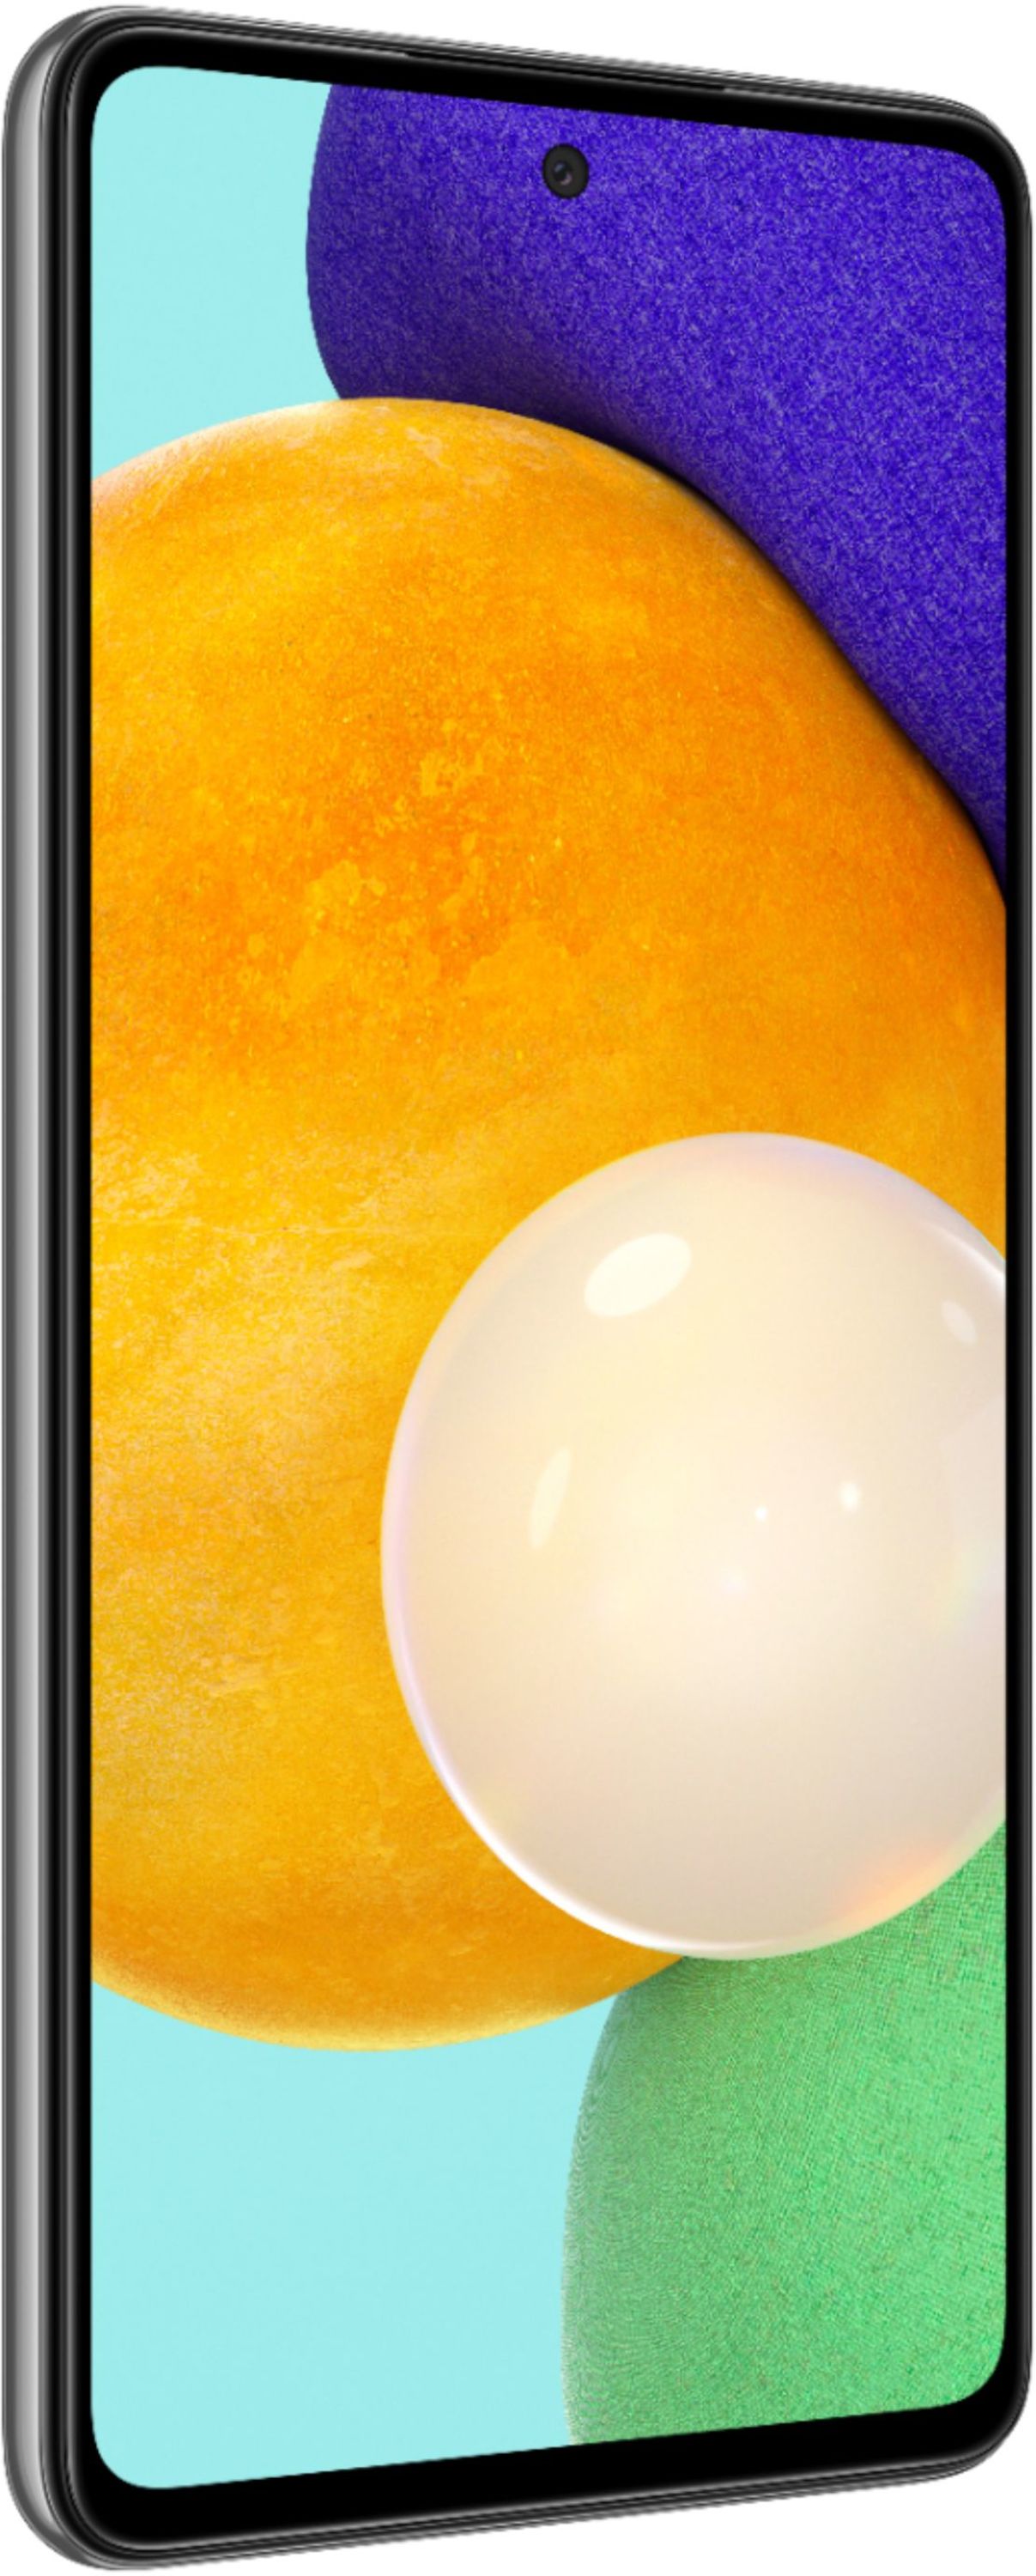 SAMSUNG Galaxy A52 5G A526U 128GB GSM / CDMA Unlocked Android Smartphone (US Version) - Awesome Black - image 2 of 6